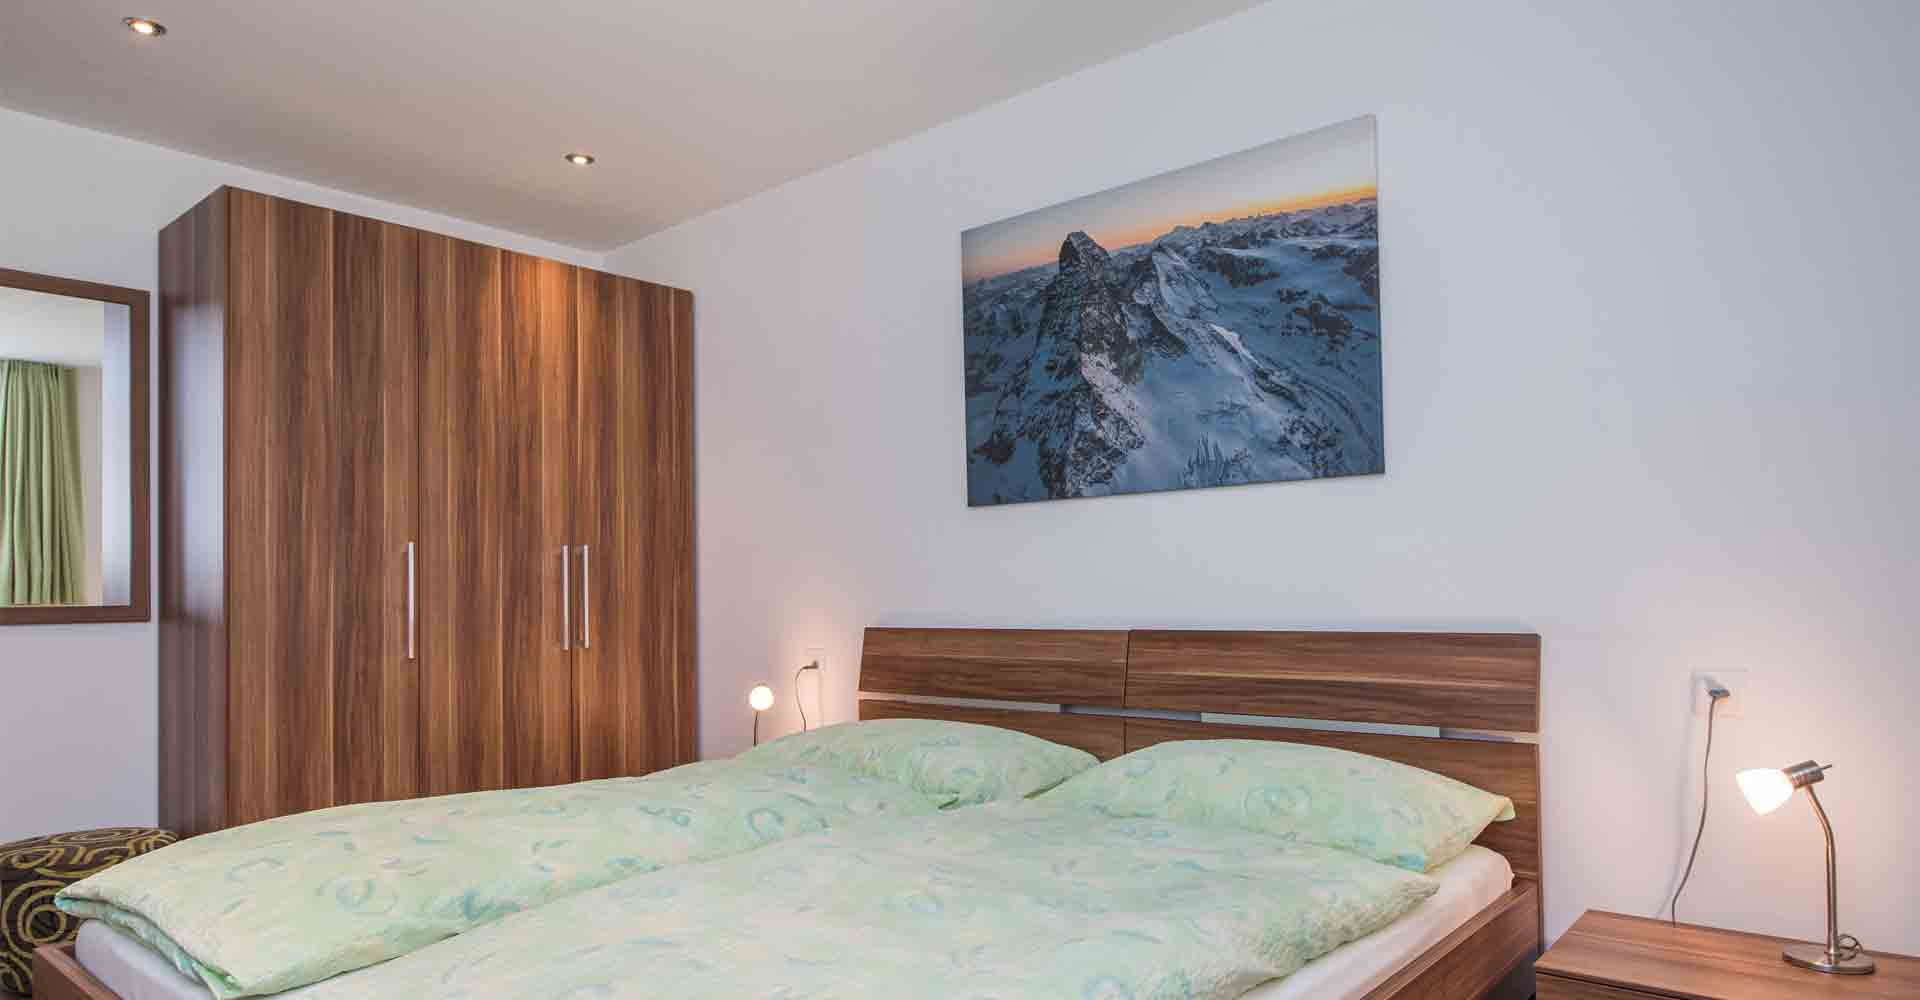 Rent a modern apartment in Zermatt